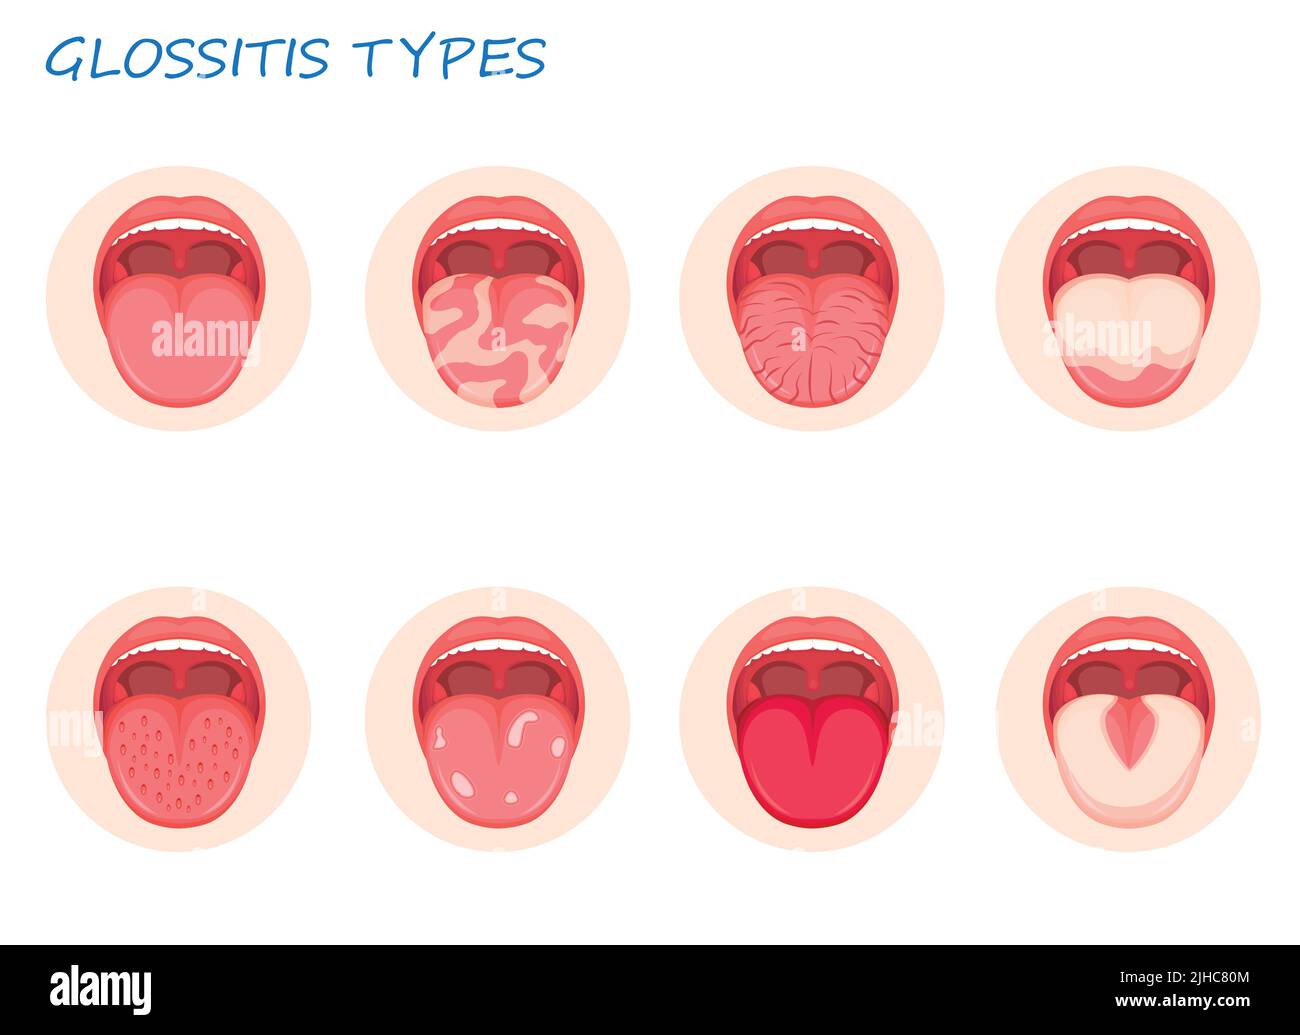 Types glossitis. Inflammatory disease tongue, vector illustration Stock Vector